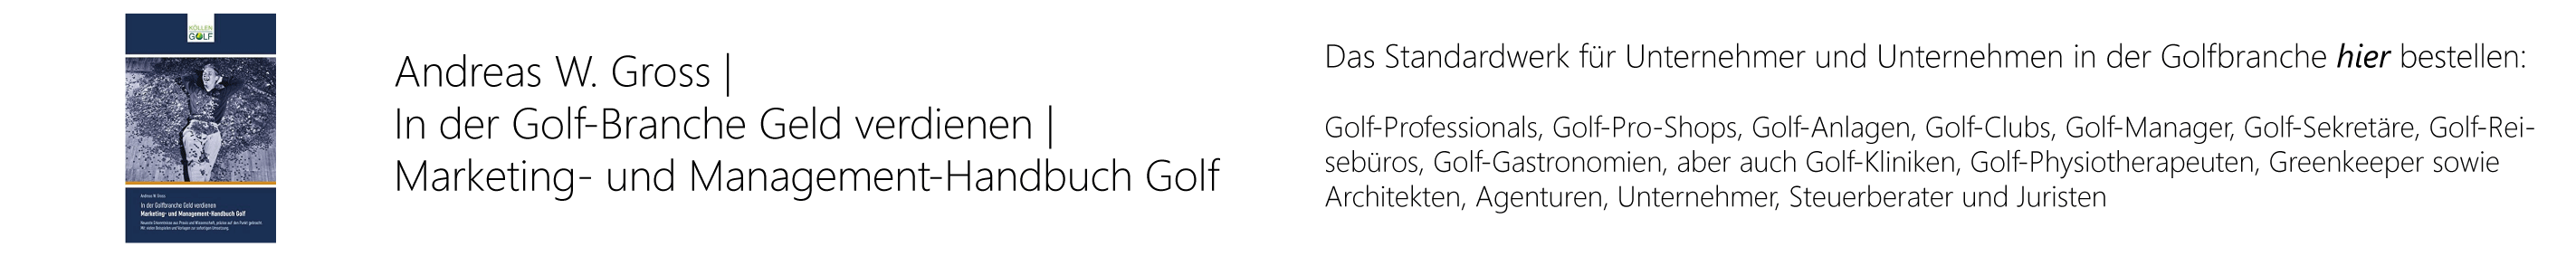 Handbuch Golf